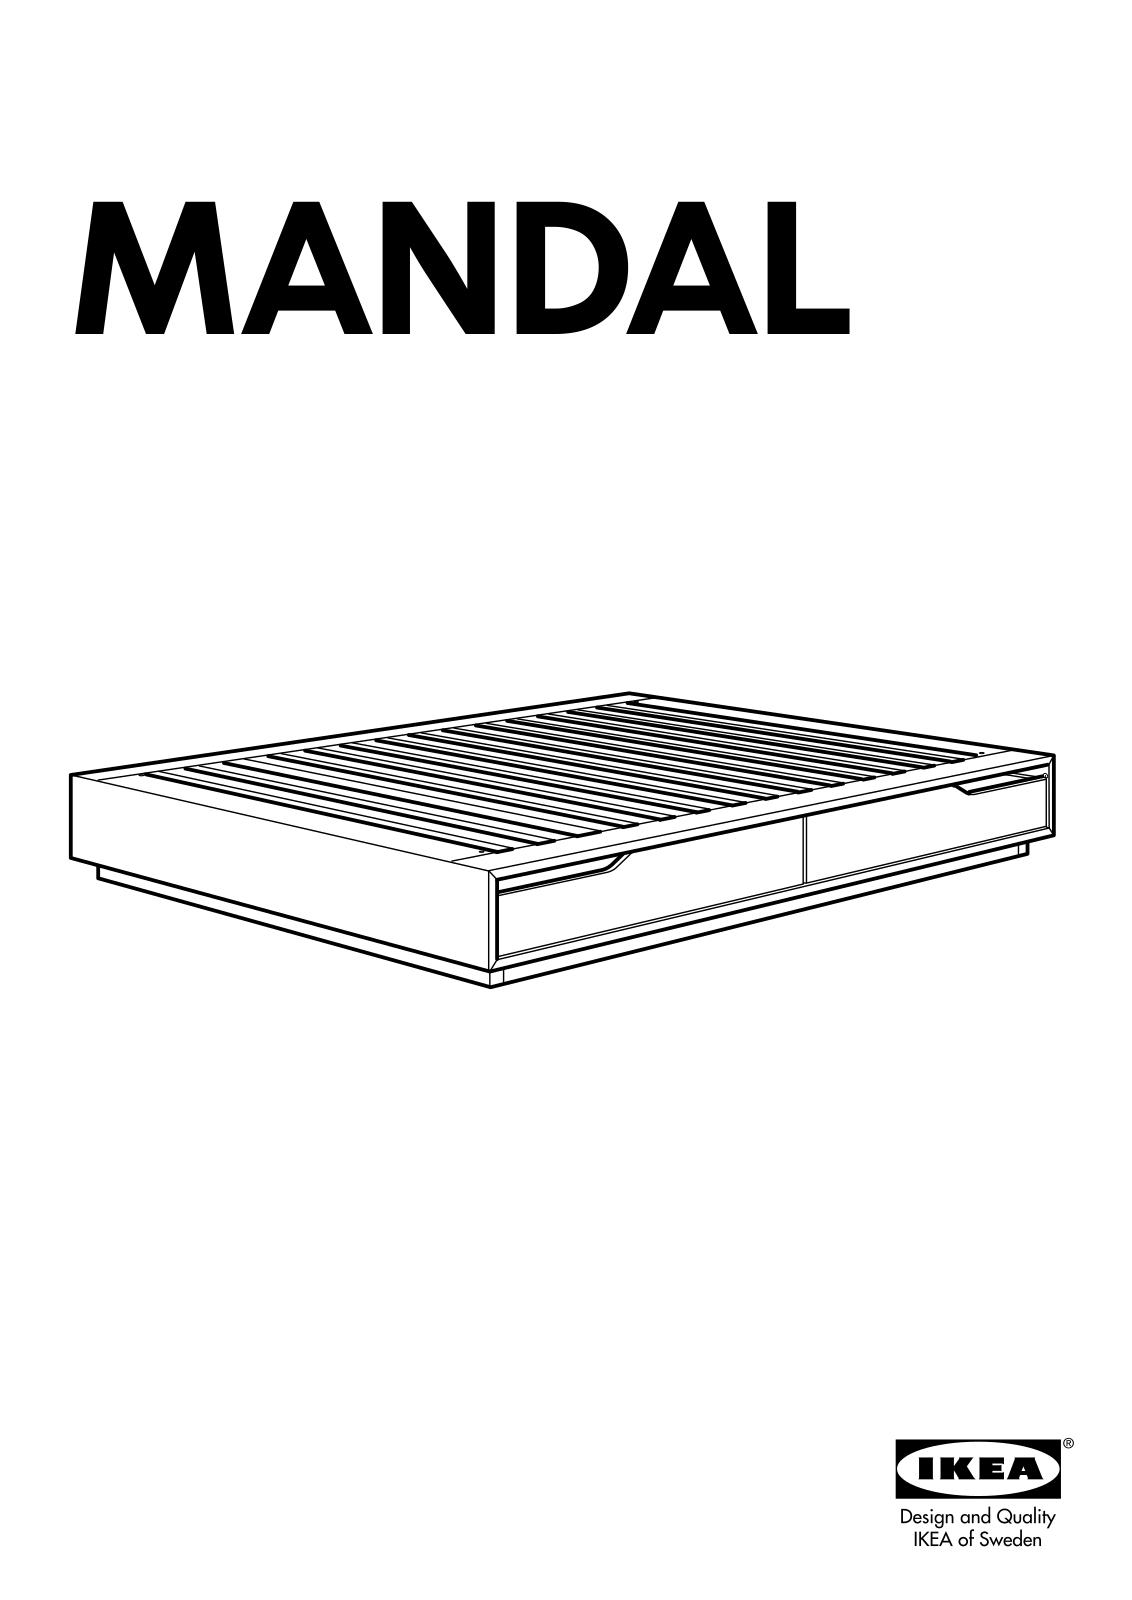 IKEA MANDAL User Manual